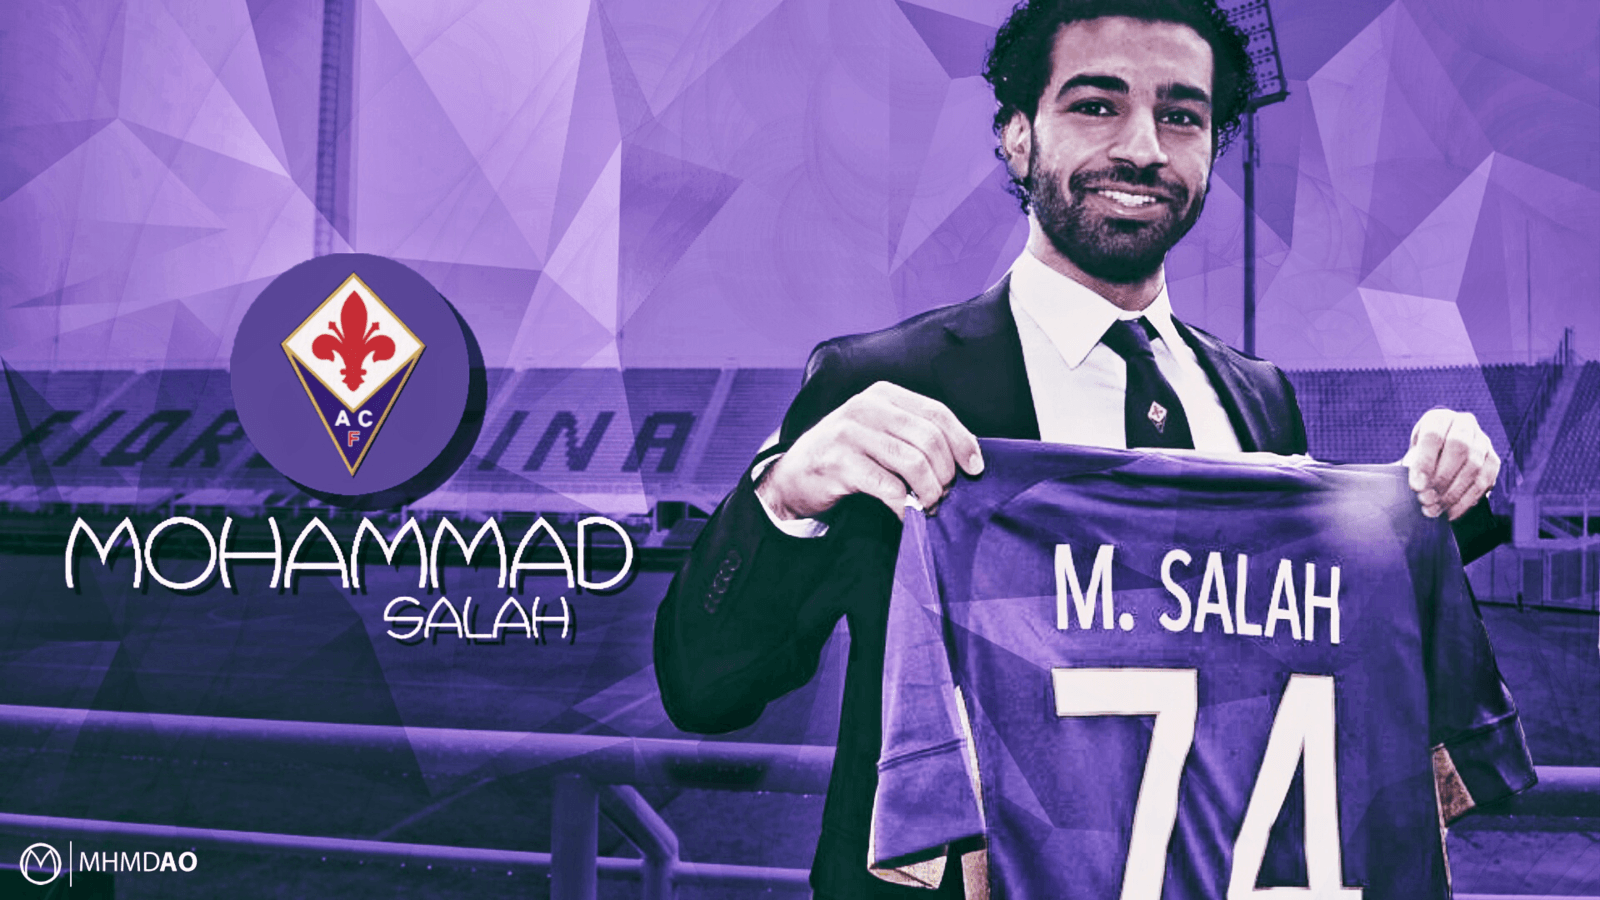 Mohammad Salah Fiorentina Wallpaper